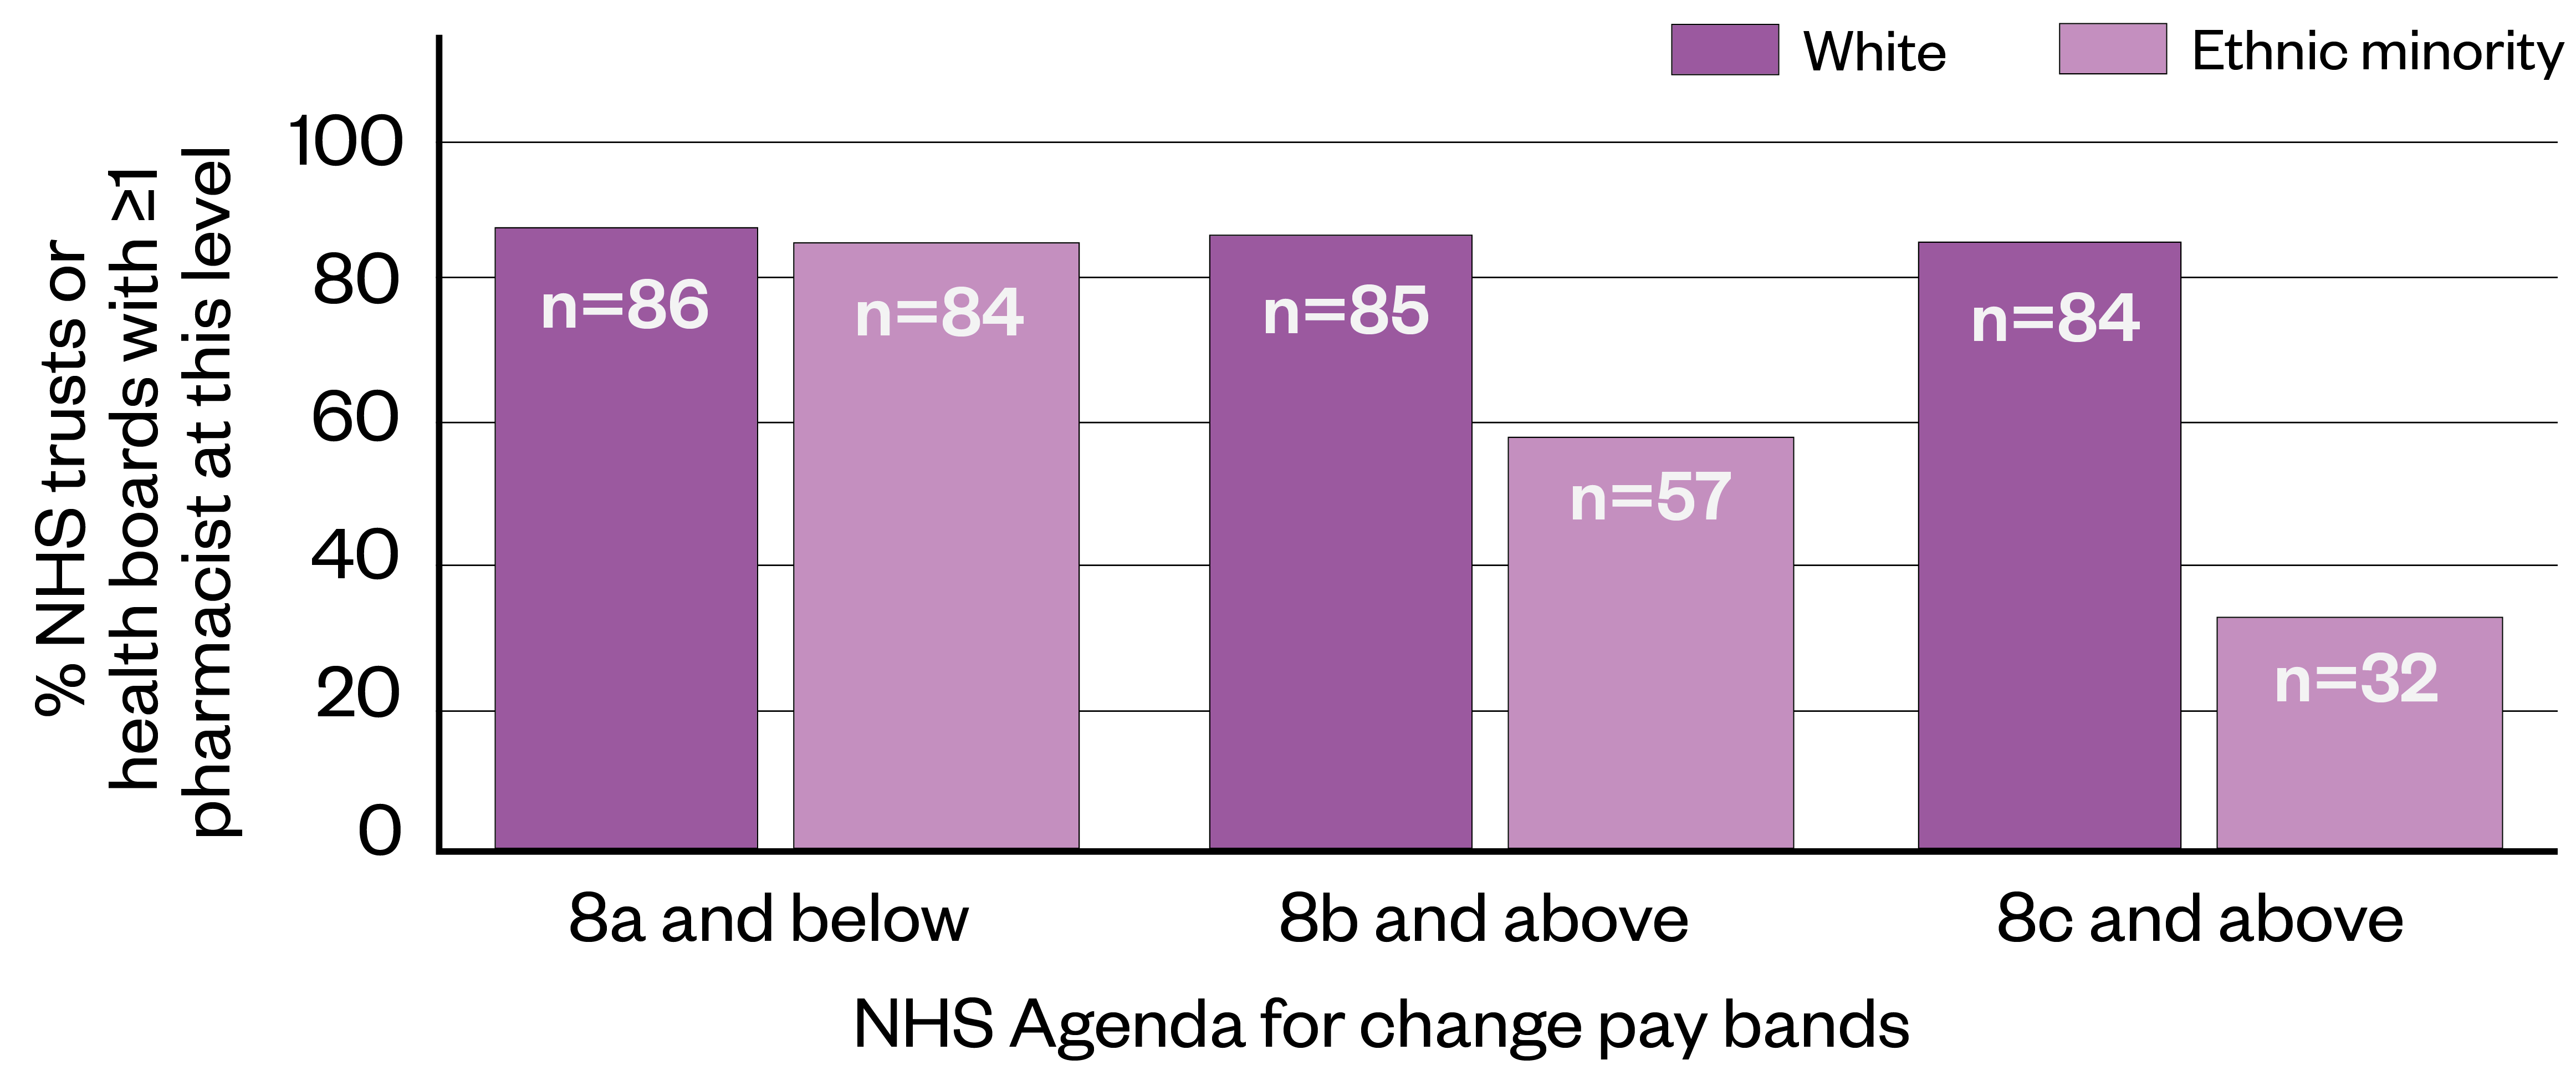 NHS Agenda for change pay bands data